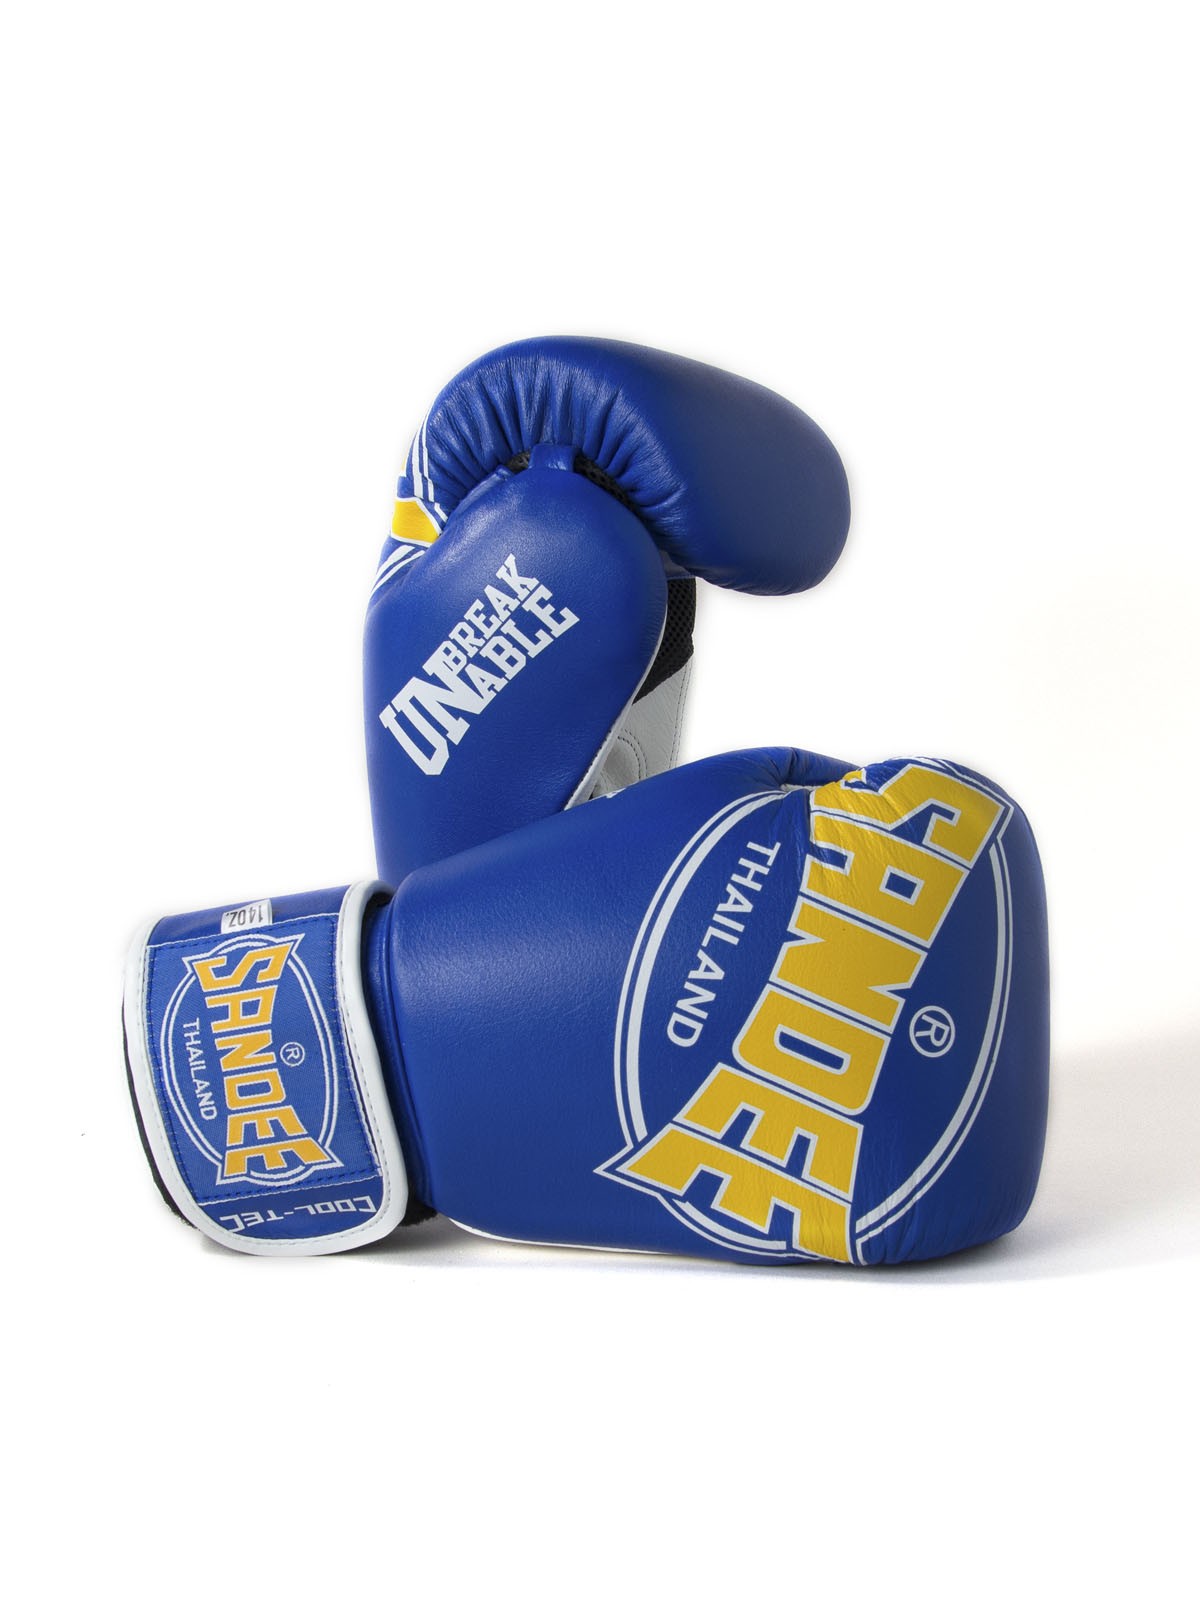 Sandee Kids Boxing Gloves Muay Thai Cool-Tec Blue Yellow White 